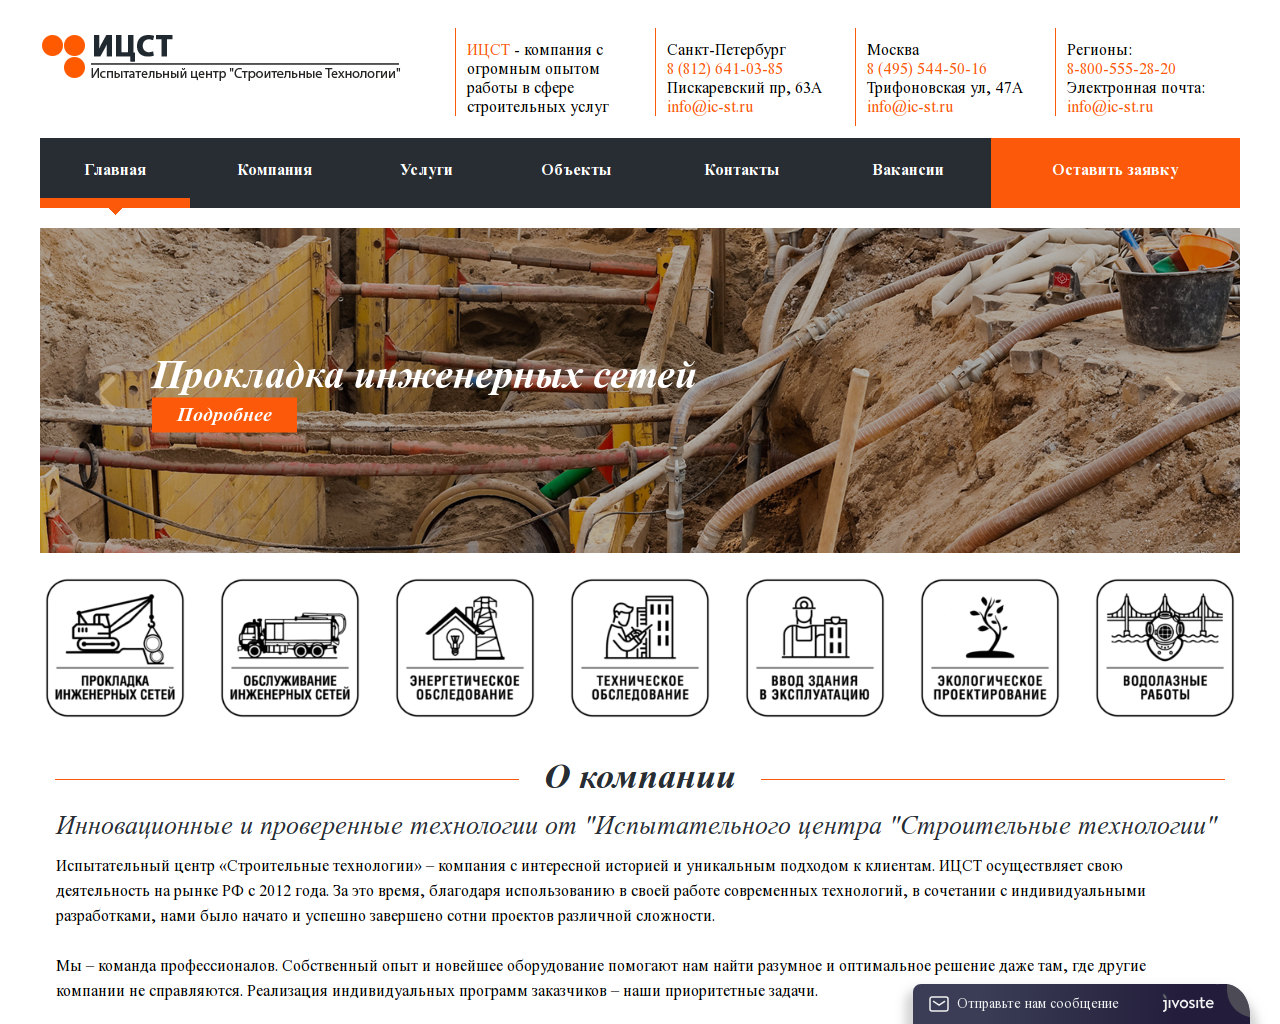 Изображение сайта ic-st.ru в разрешении 1280x1024